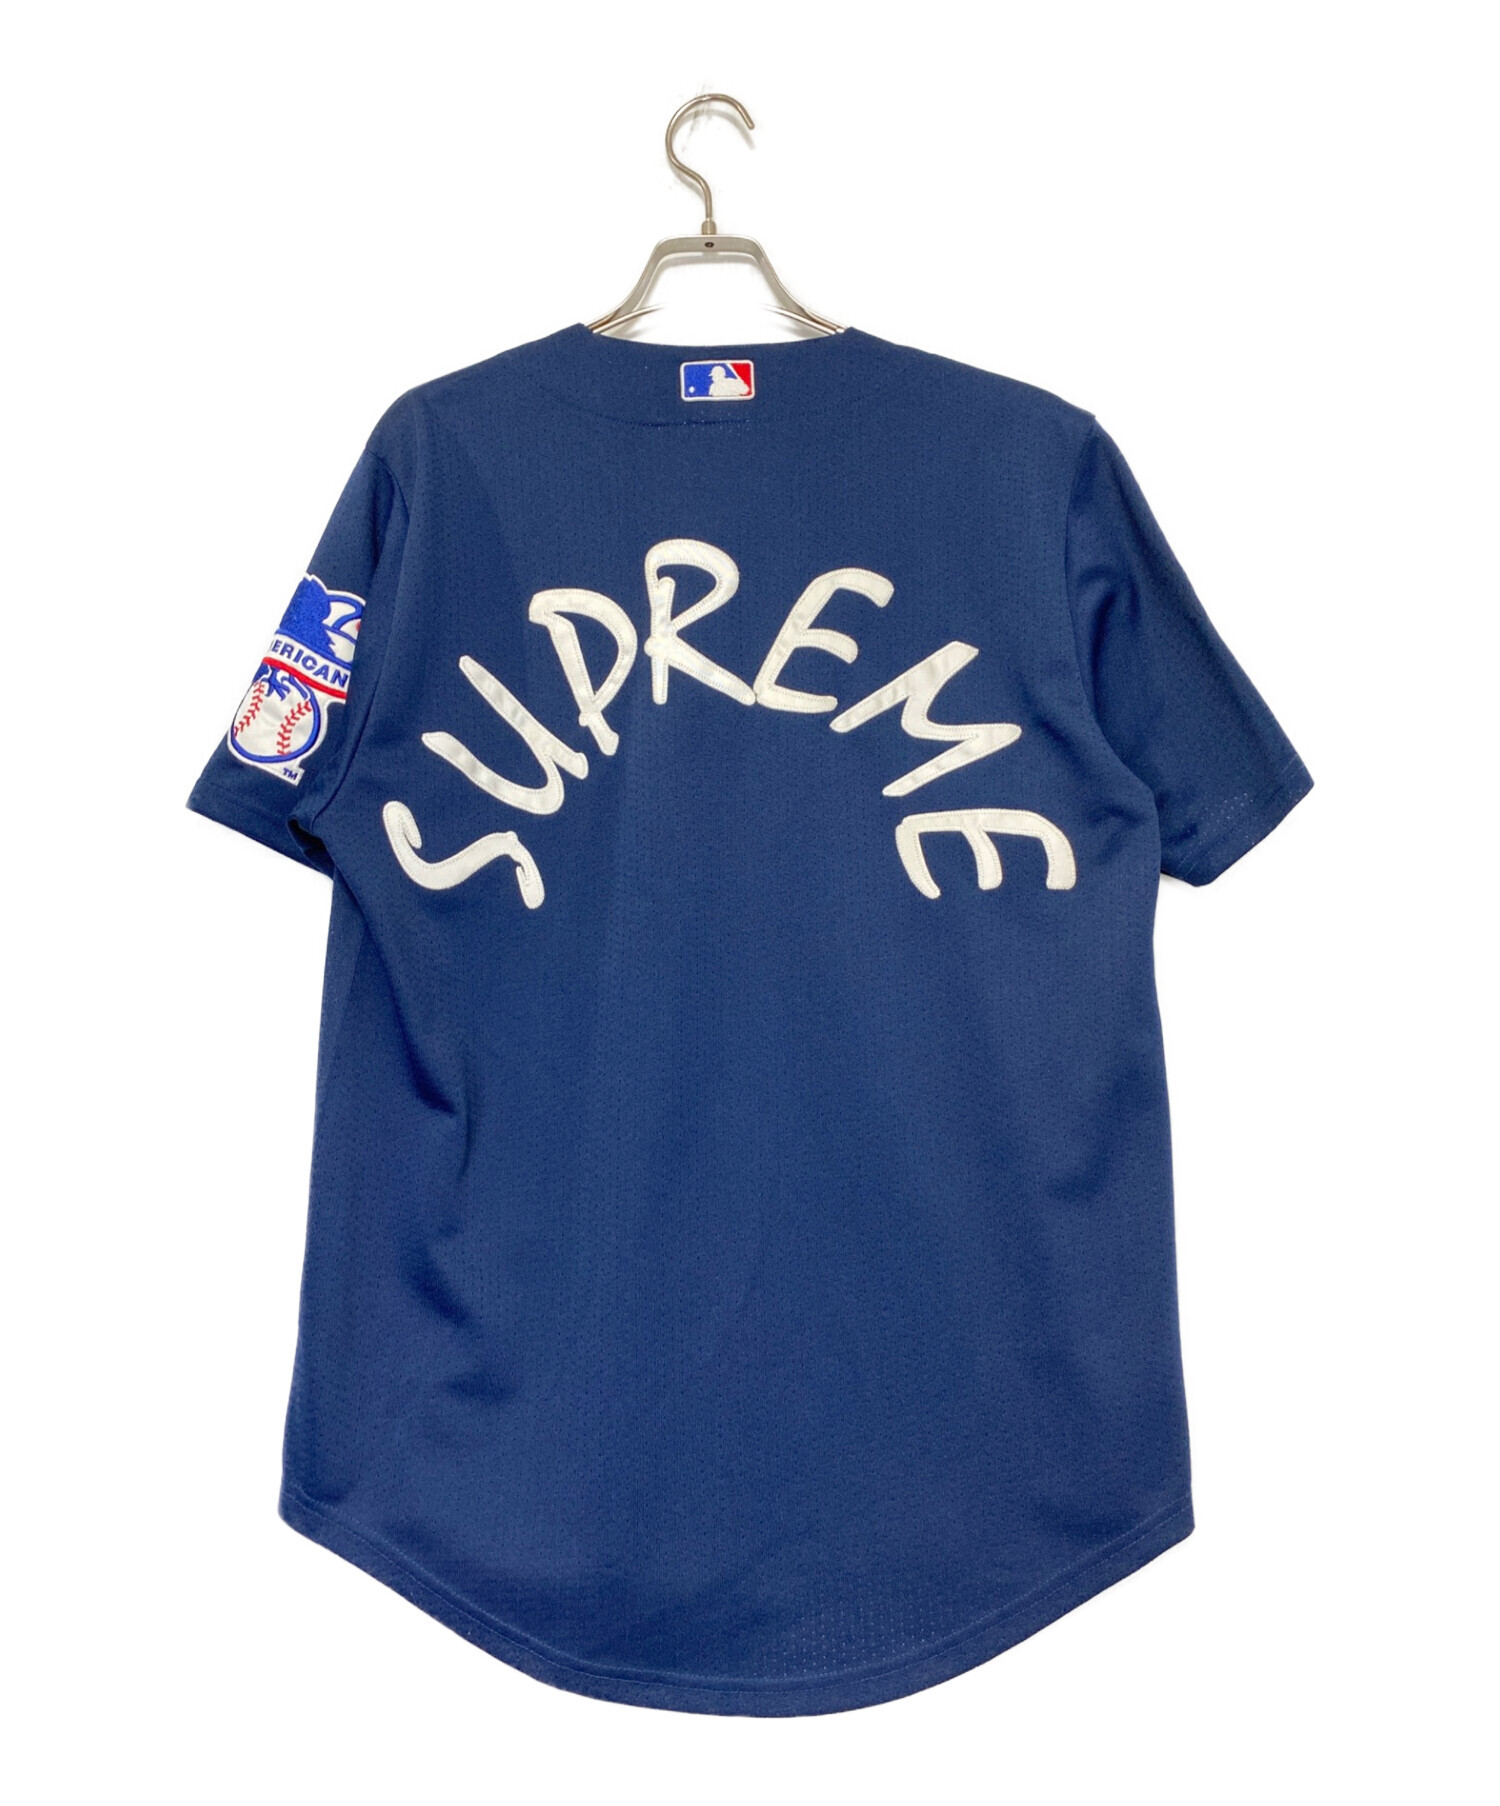 supreme×newyork yankees baseball jersey